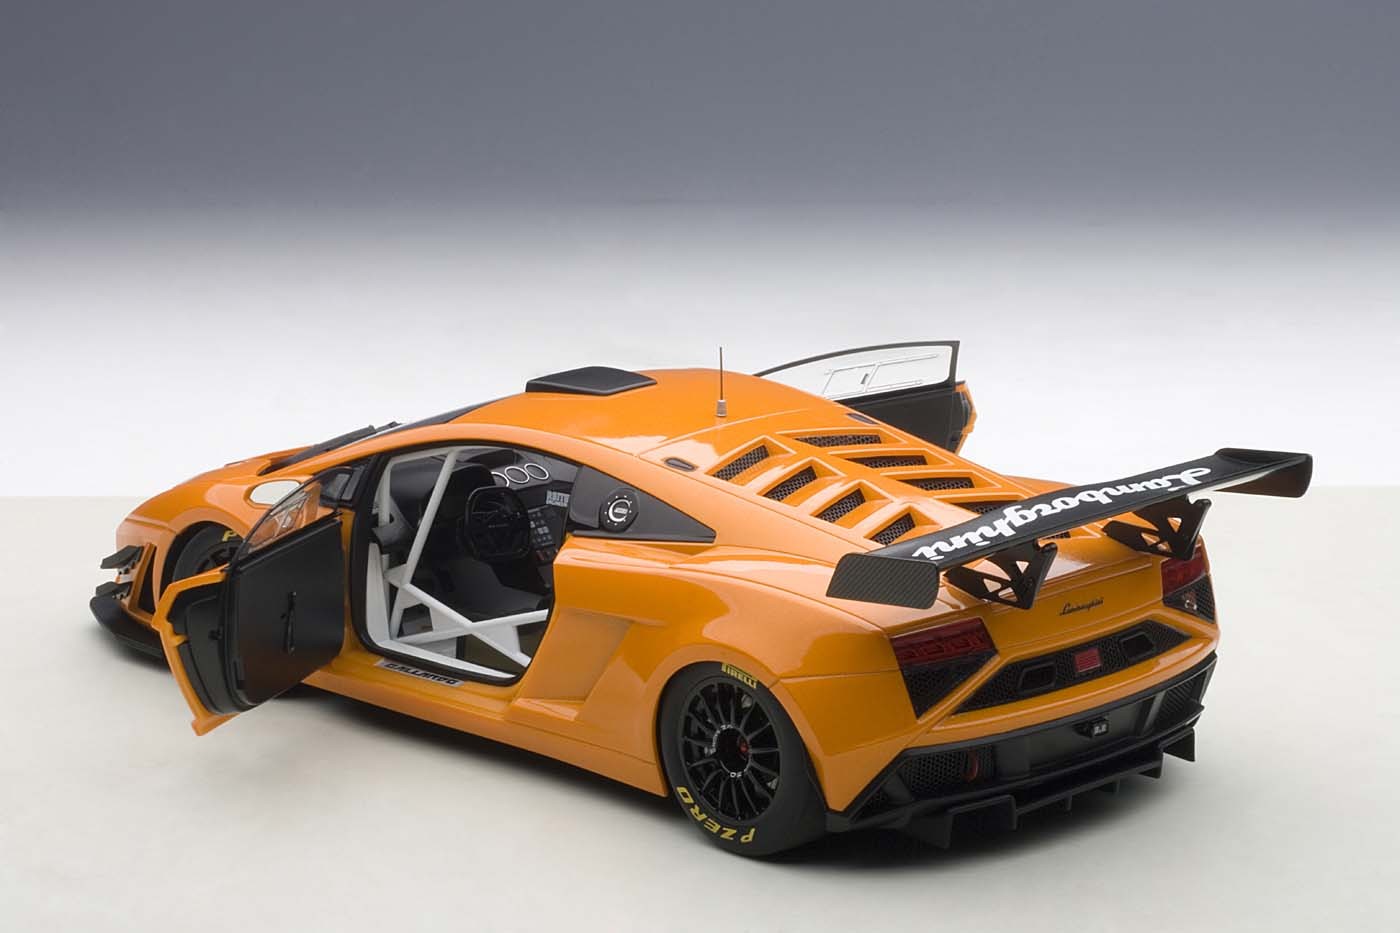 Sale! Lamborghini Gallardo GT3 2013 Orange Composite 2 Door AUTOart 81357  AUTOart 1:18